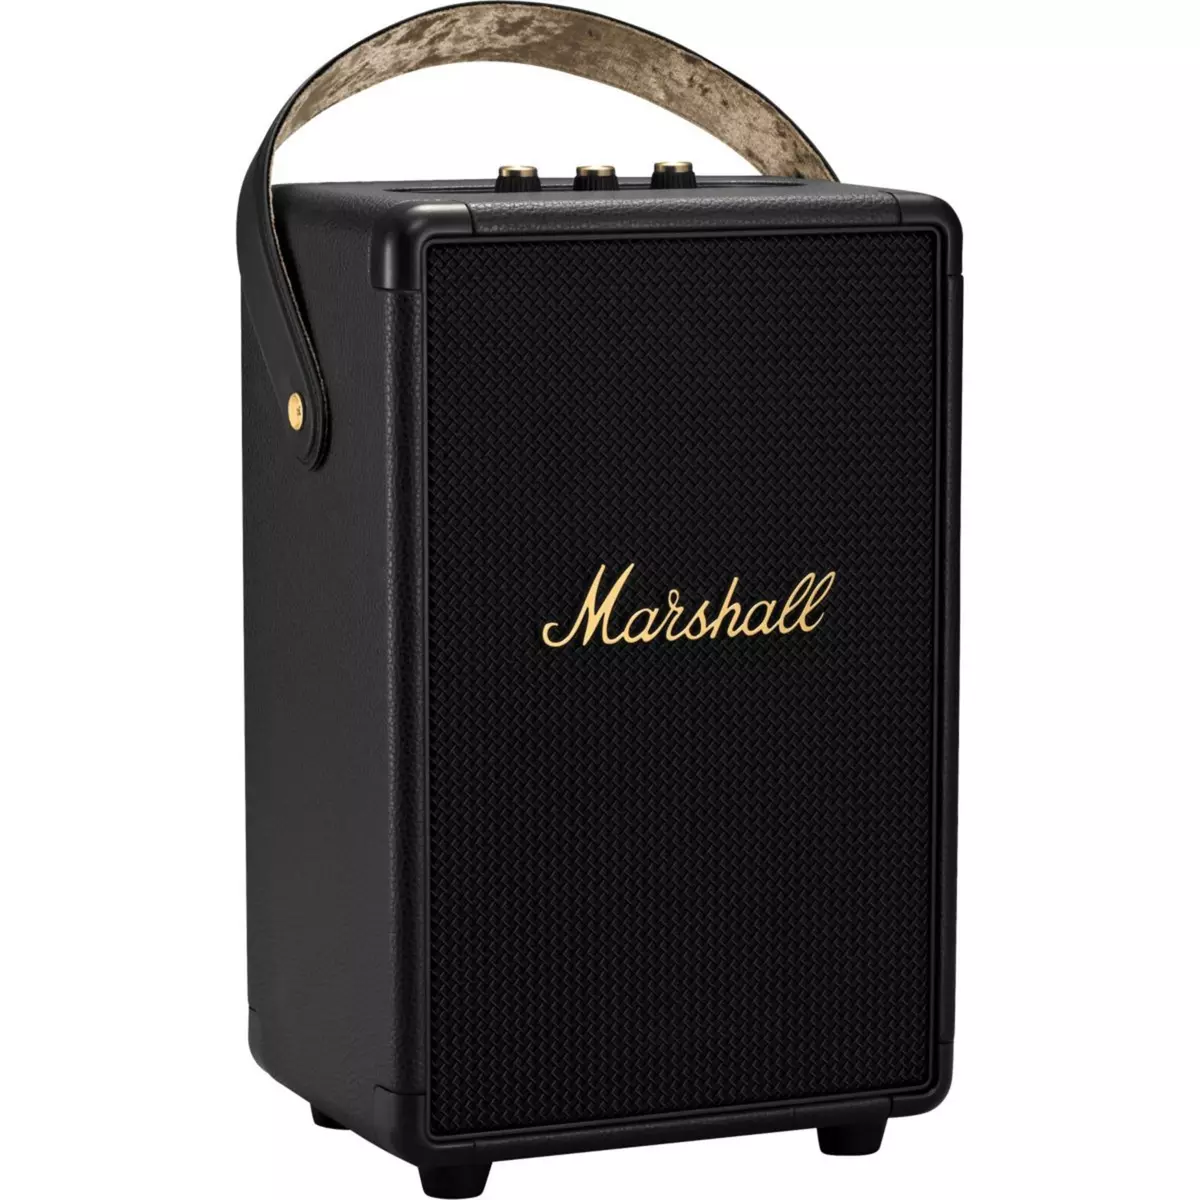 MARSHALL Enceinte portable Tufton Black & Brass